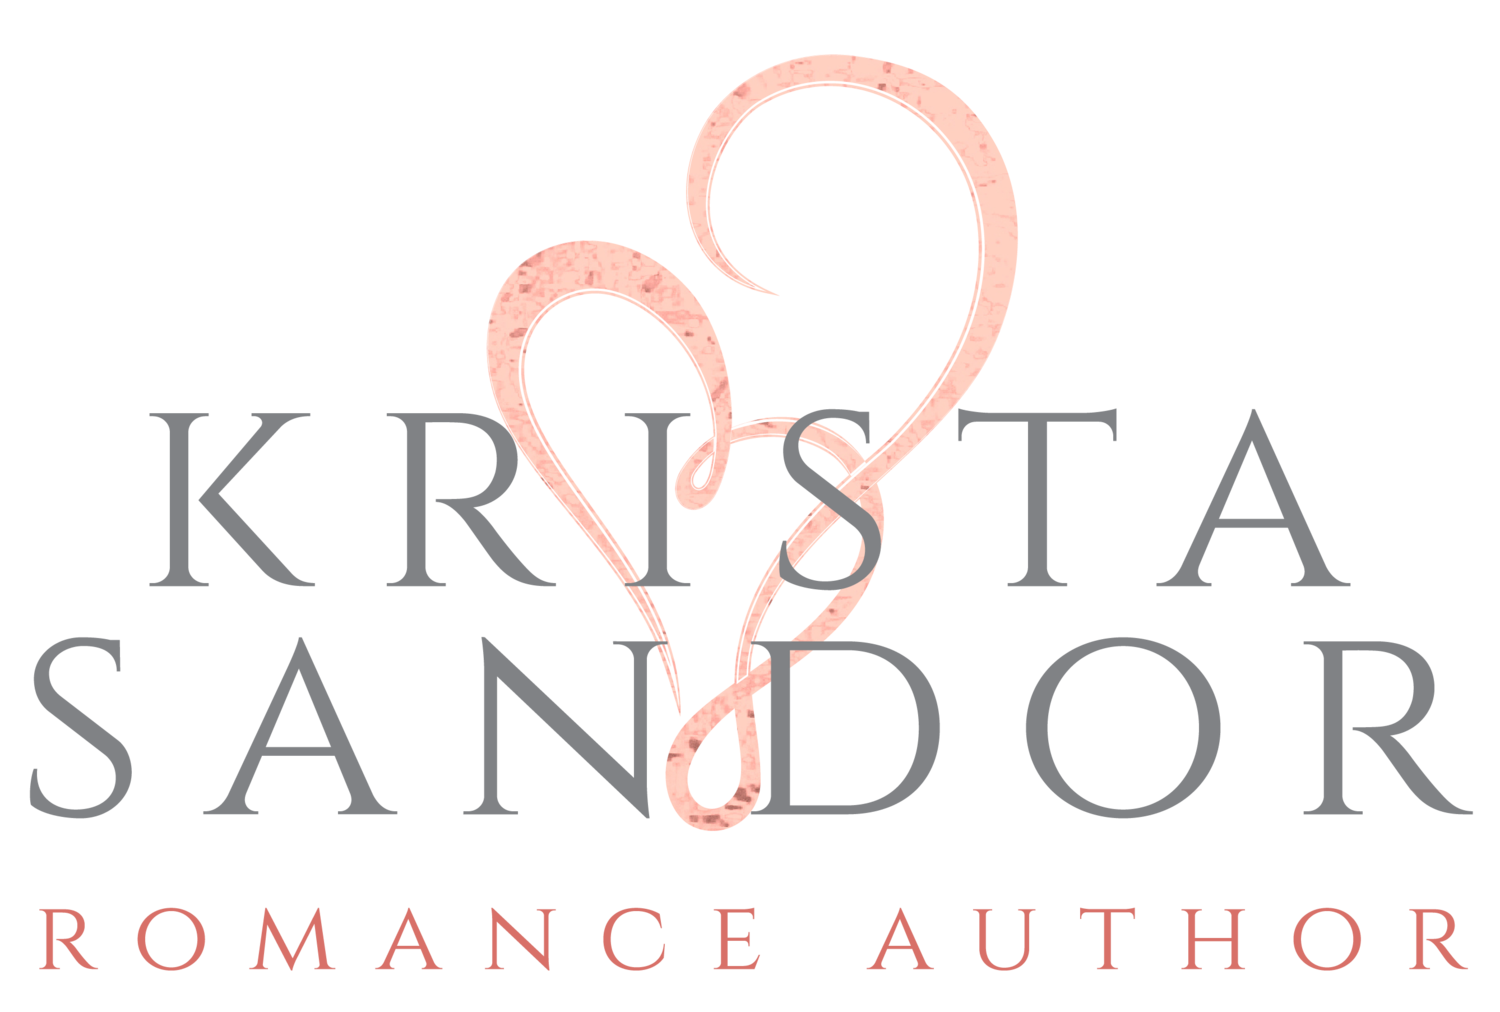 Author Krista Sandor